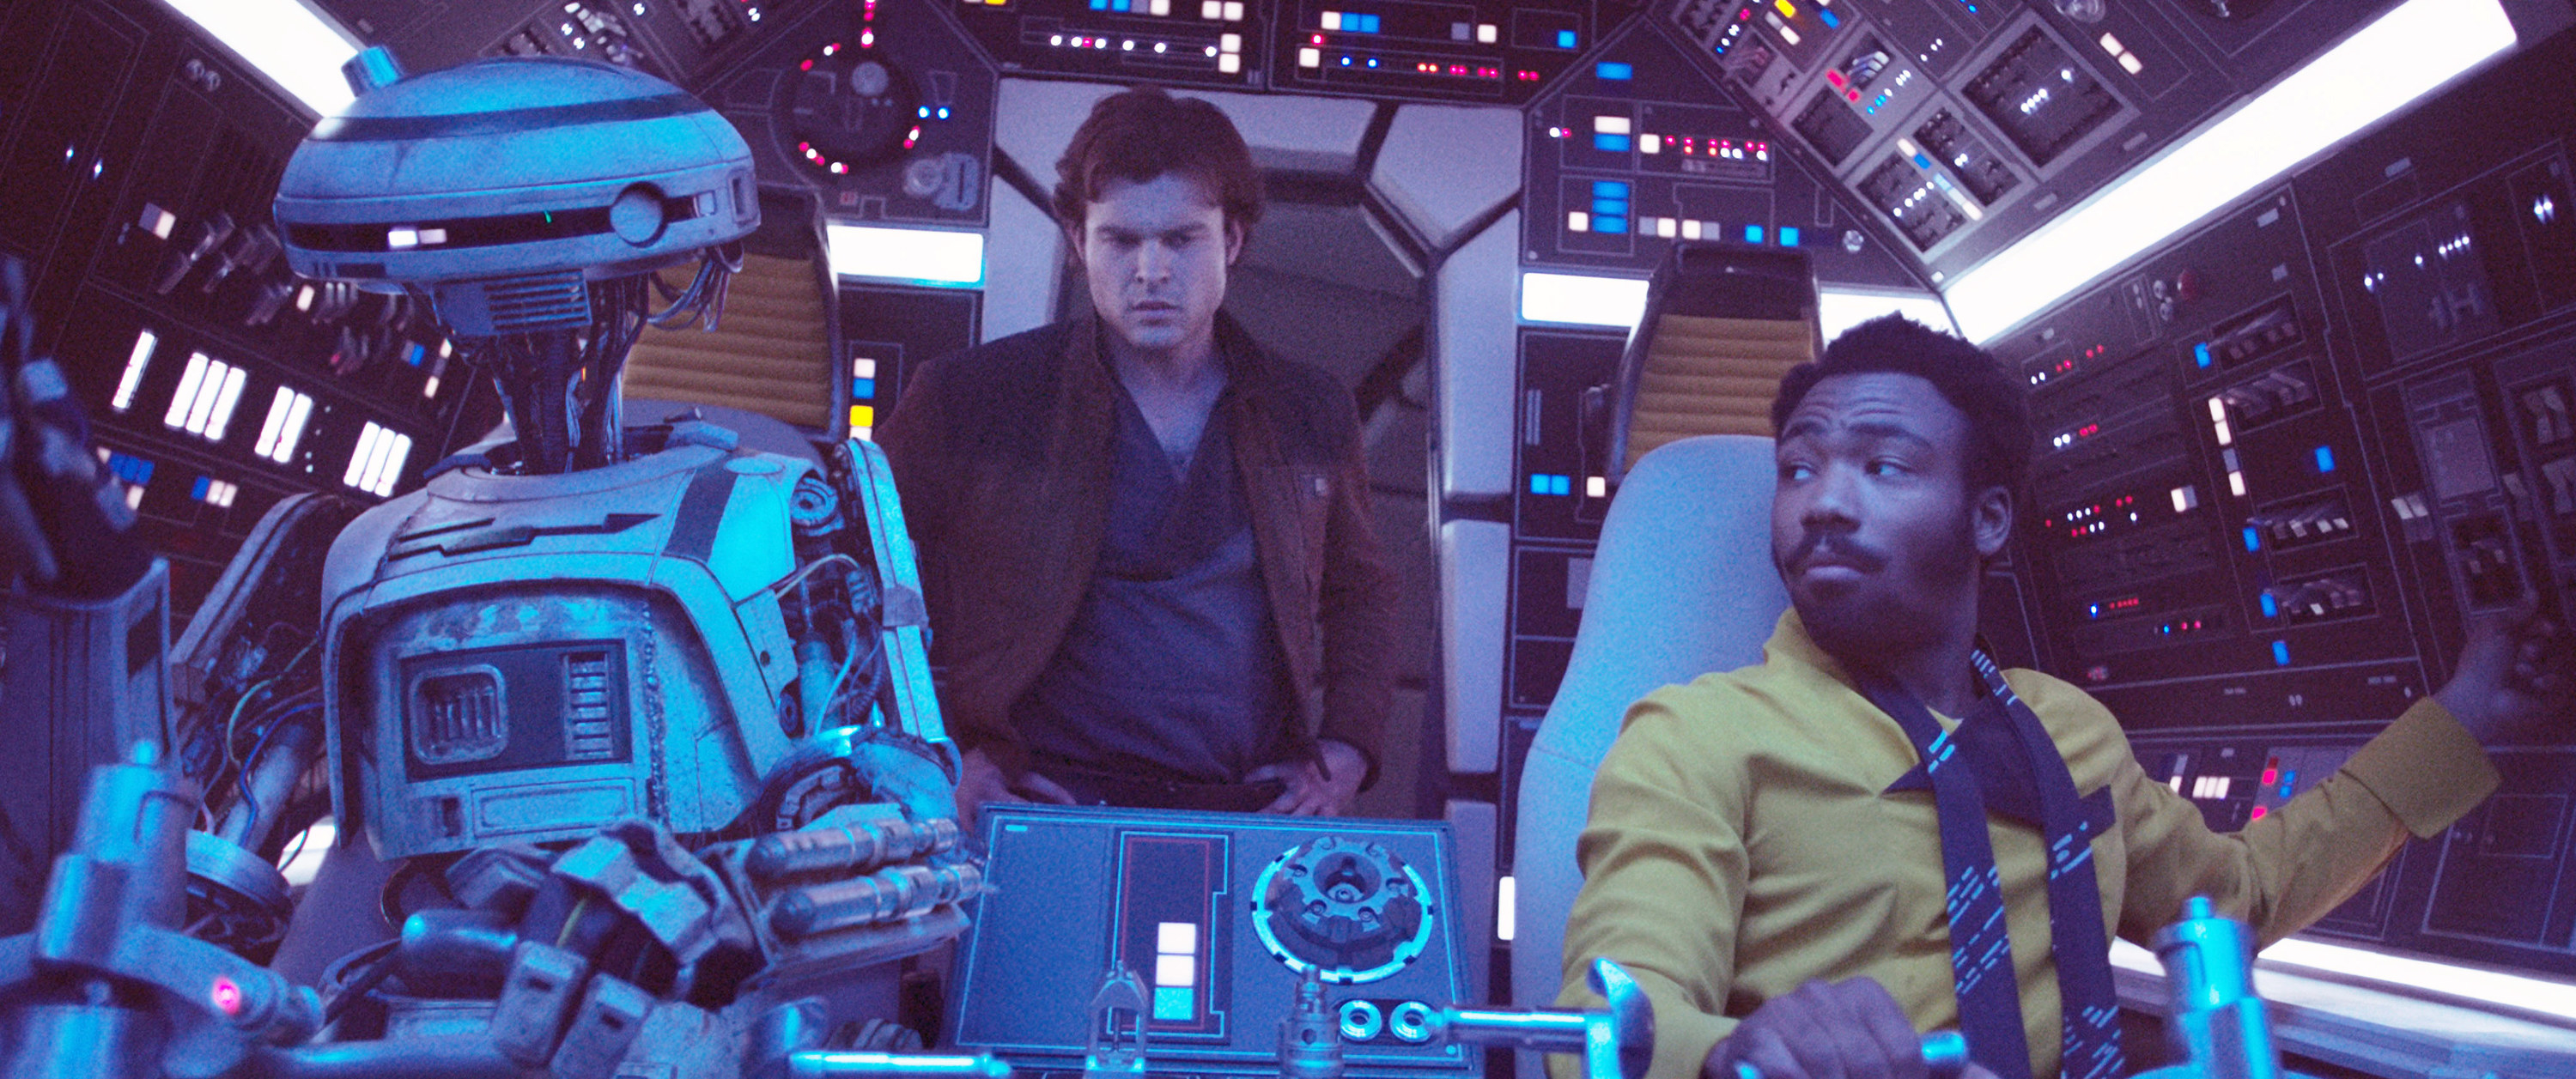 Alden Ehrenreich as Han Solo, Donald Glover as Lando inside the cockpit of the Millenium Falcon